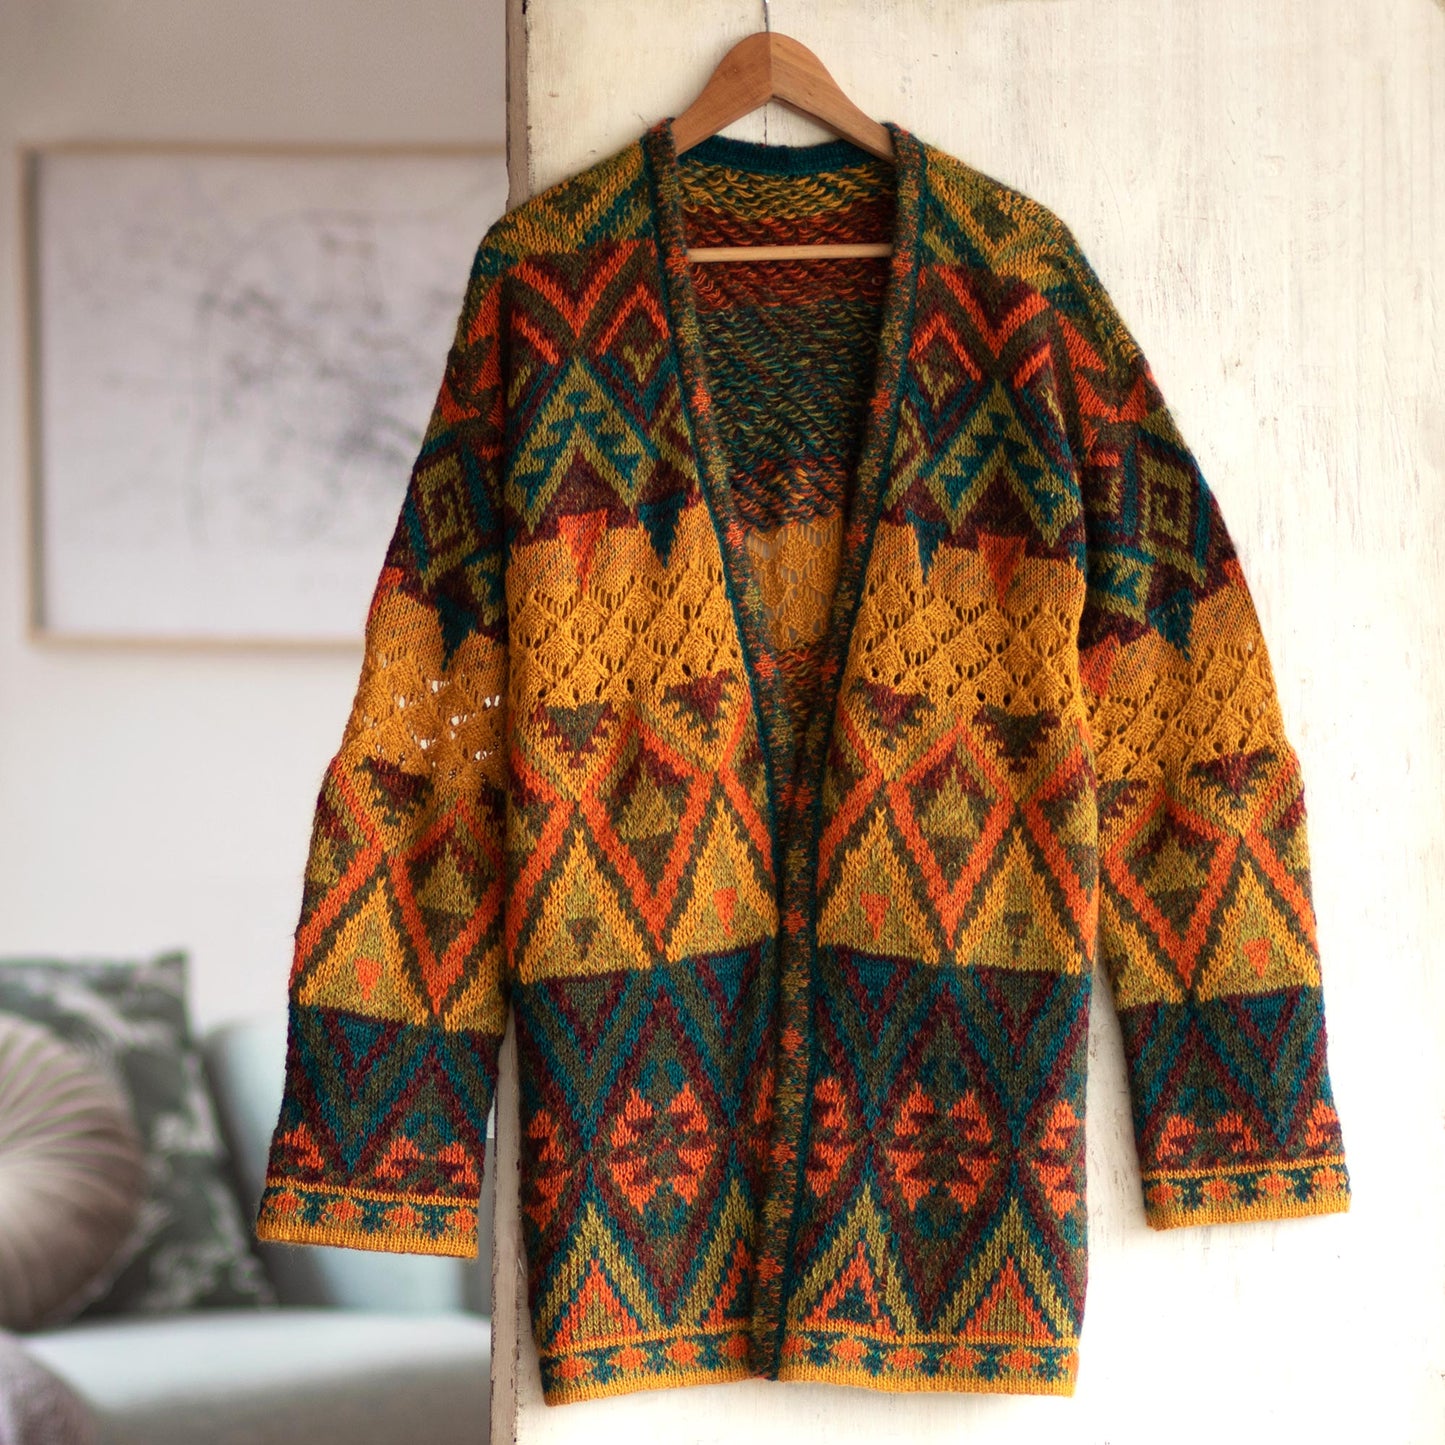 Chevere Art Knit Cardigan  Baby Alpaca Blend Geometric Motifs Knit Cardigan Sweater